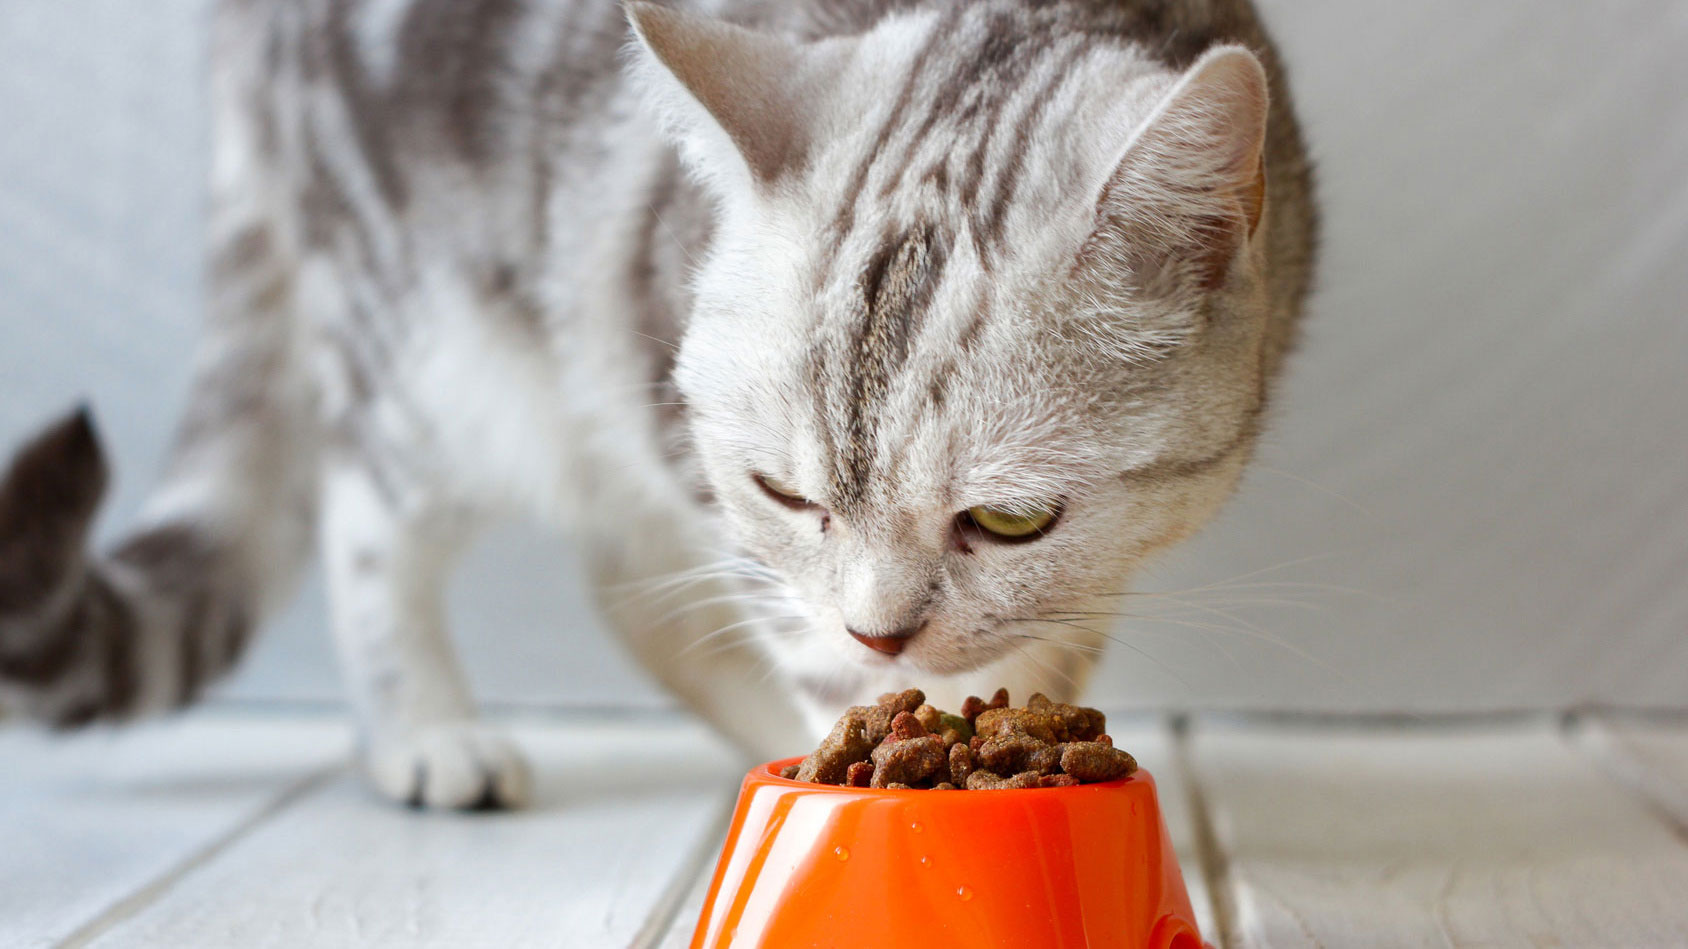 Cat with orange food bowl